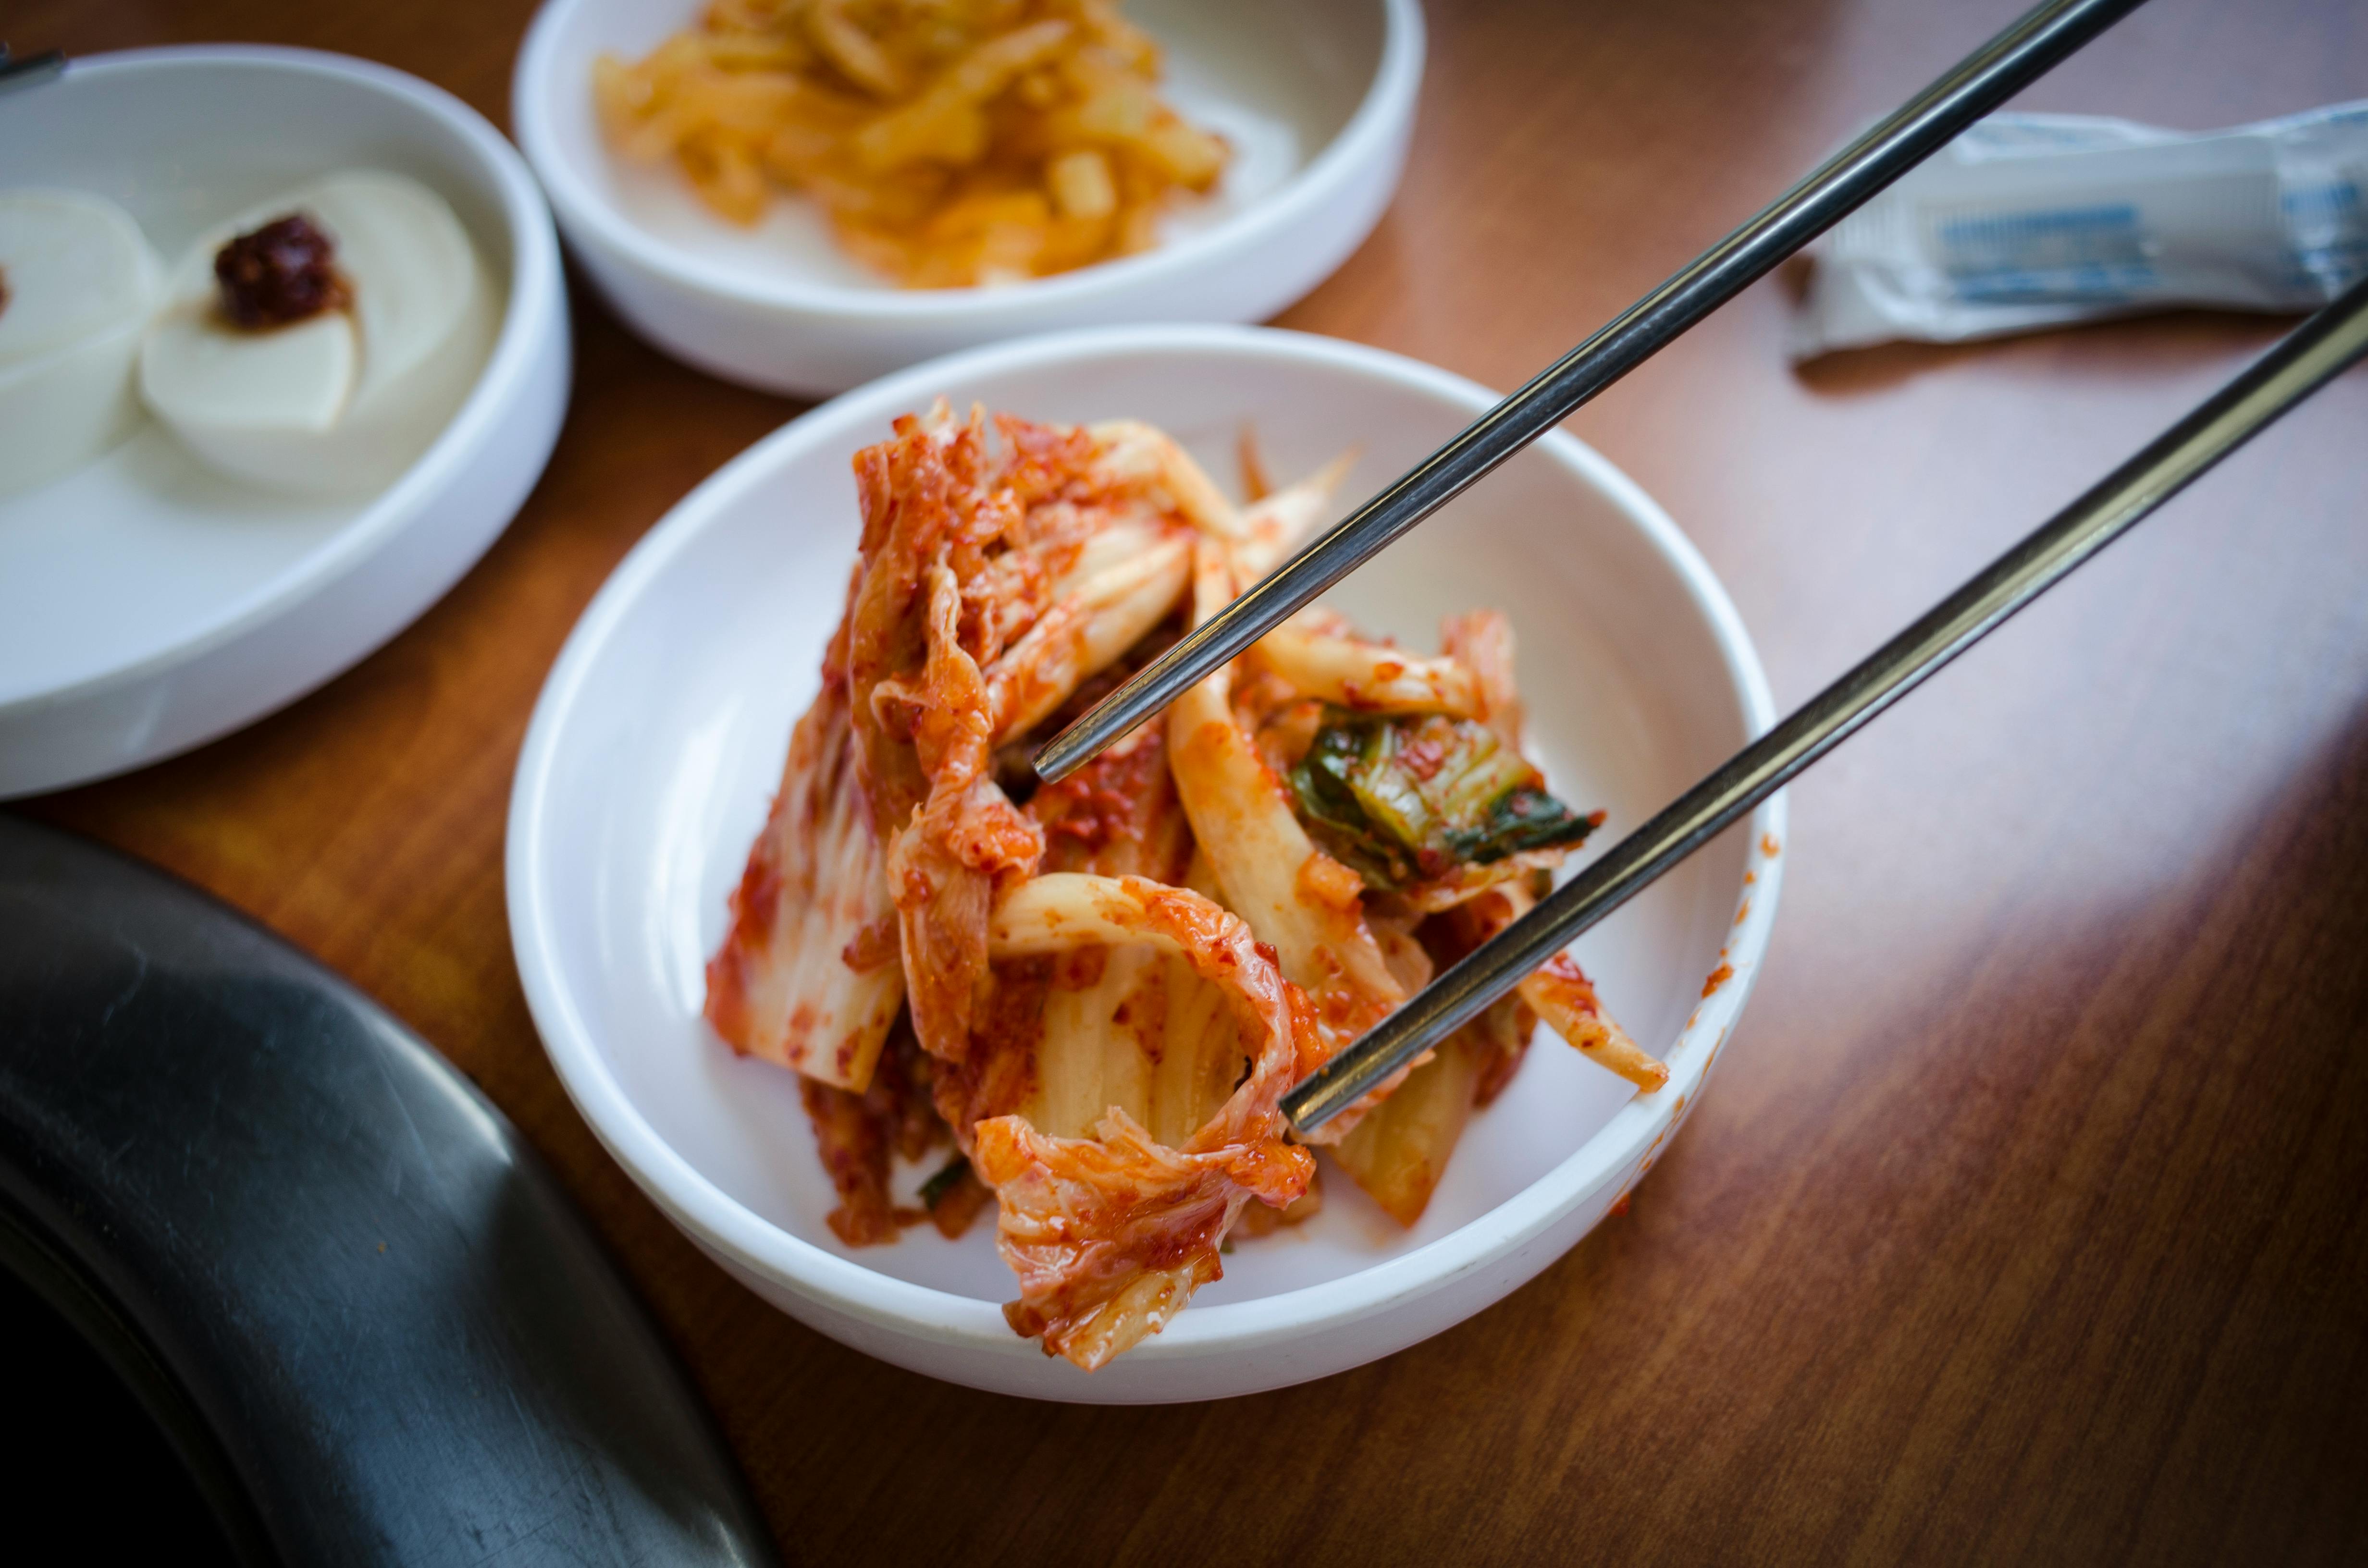 27,100+ Kimchi Stock Photos, Pictures & Royalty-Free Images - iStock |  Korean food, Sauerkraut, Kombucha